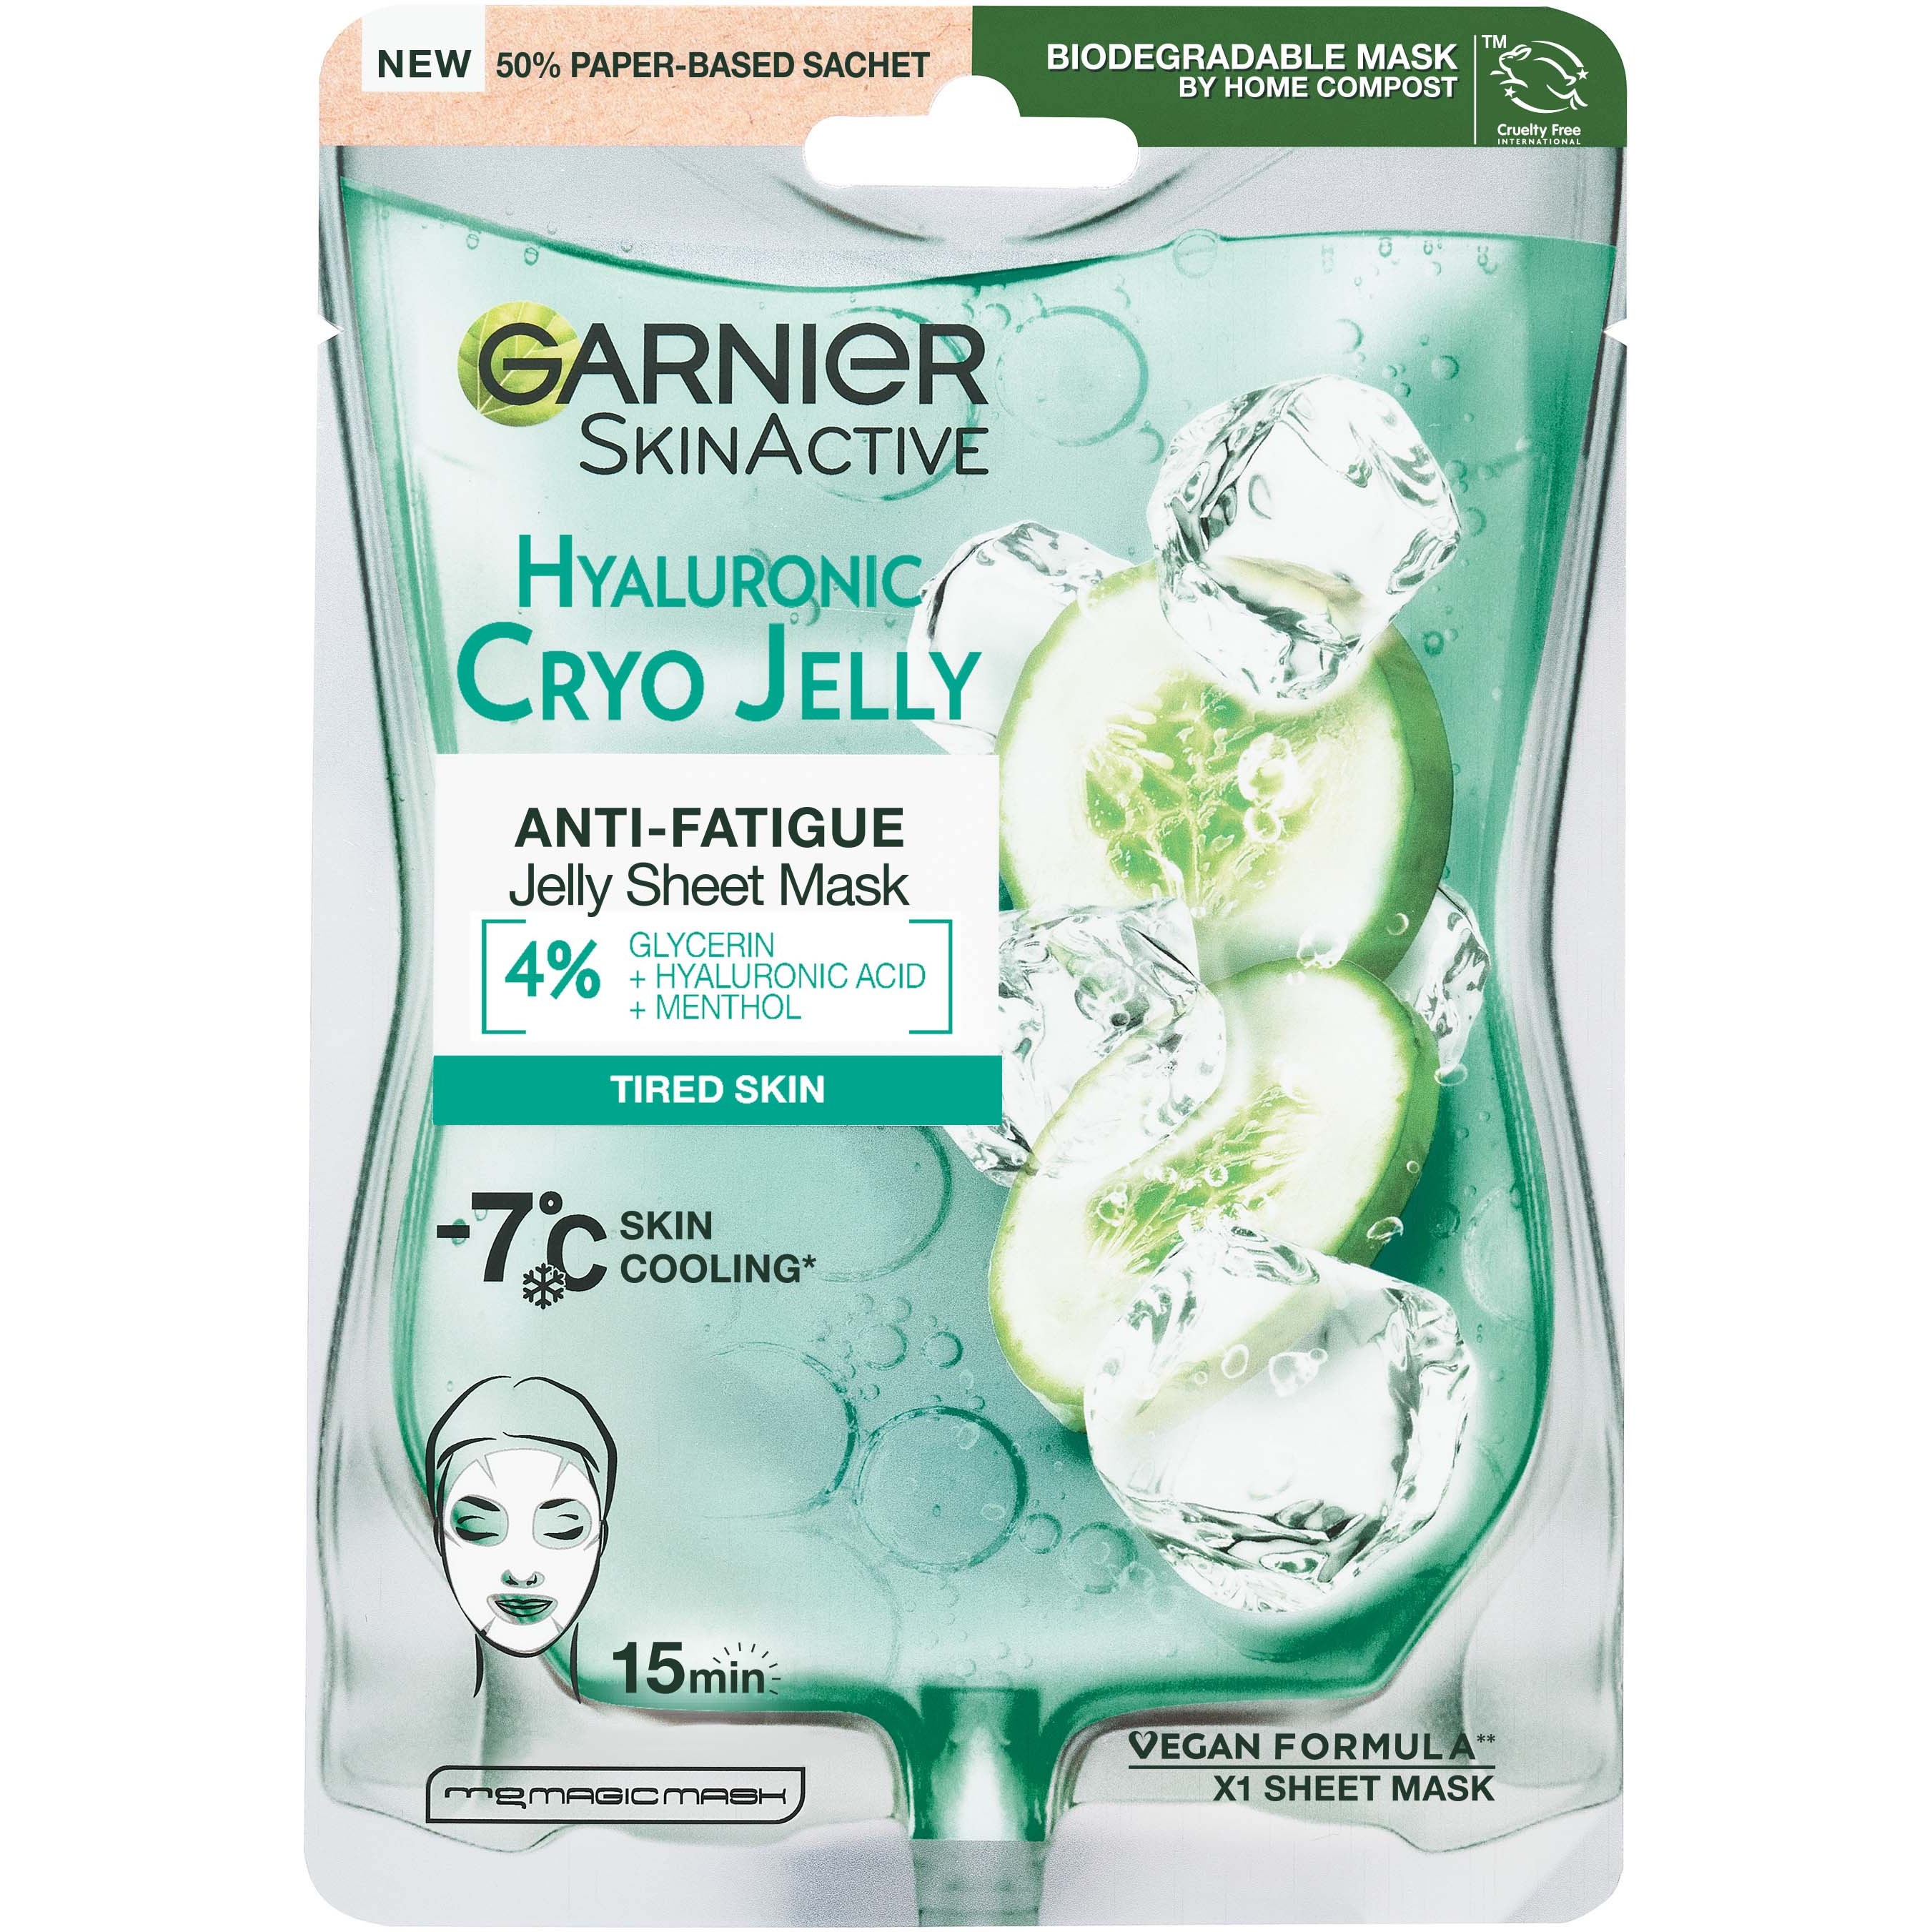 Garnier SkinActive Cryo Jelly Sheet Mask Face